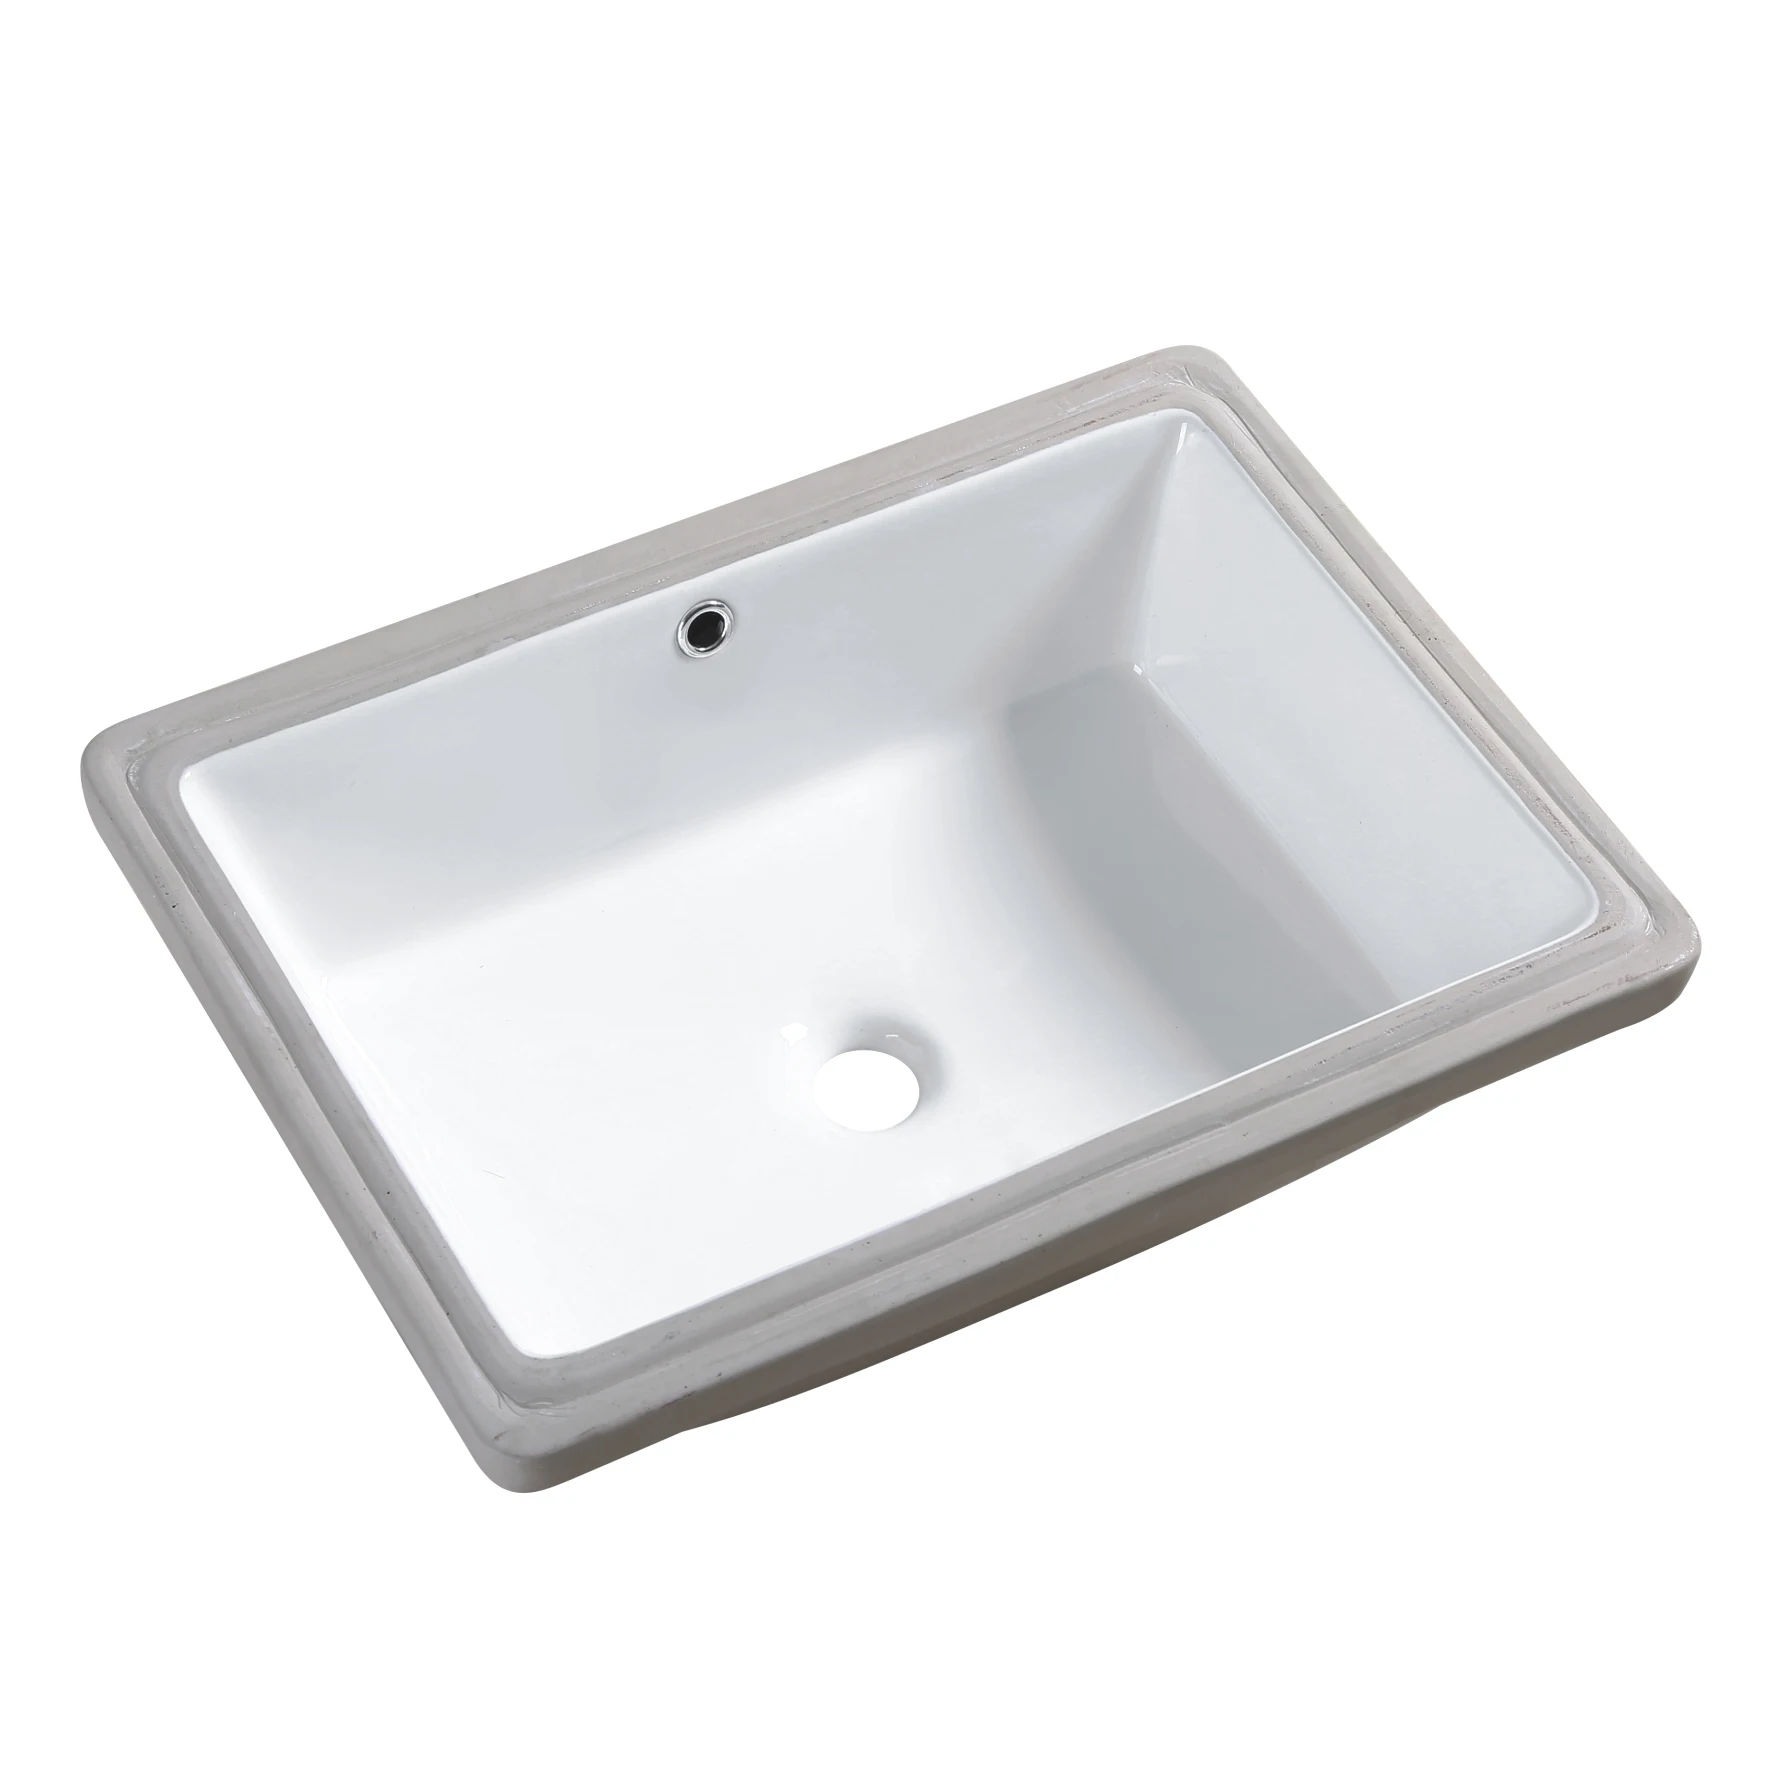 New style bathroom daily use hand wash basin rectangular Hotel customized ceramic under counter basin